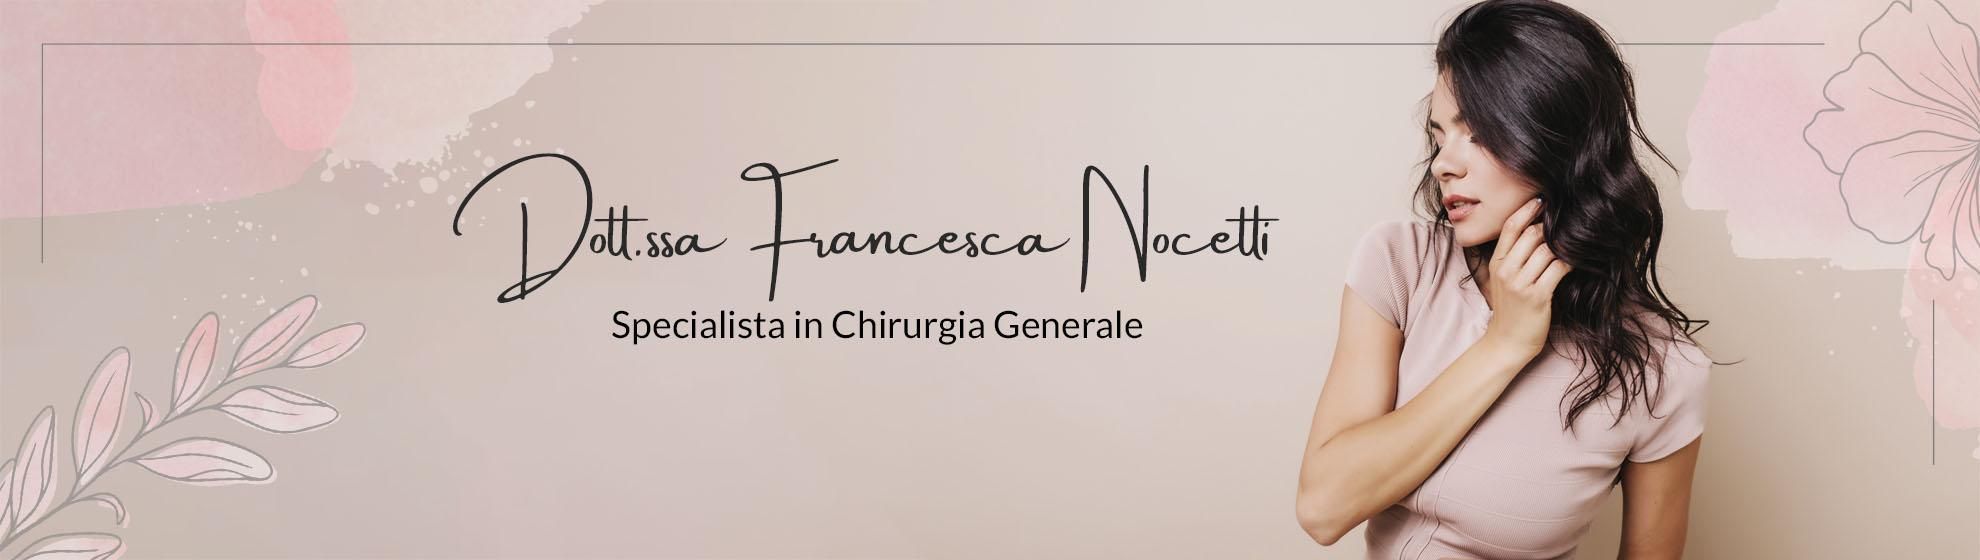 Dott.ssa Francesca Nocetti